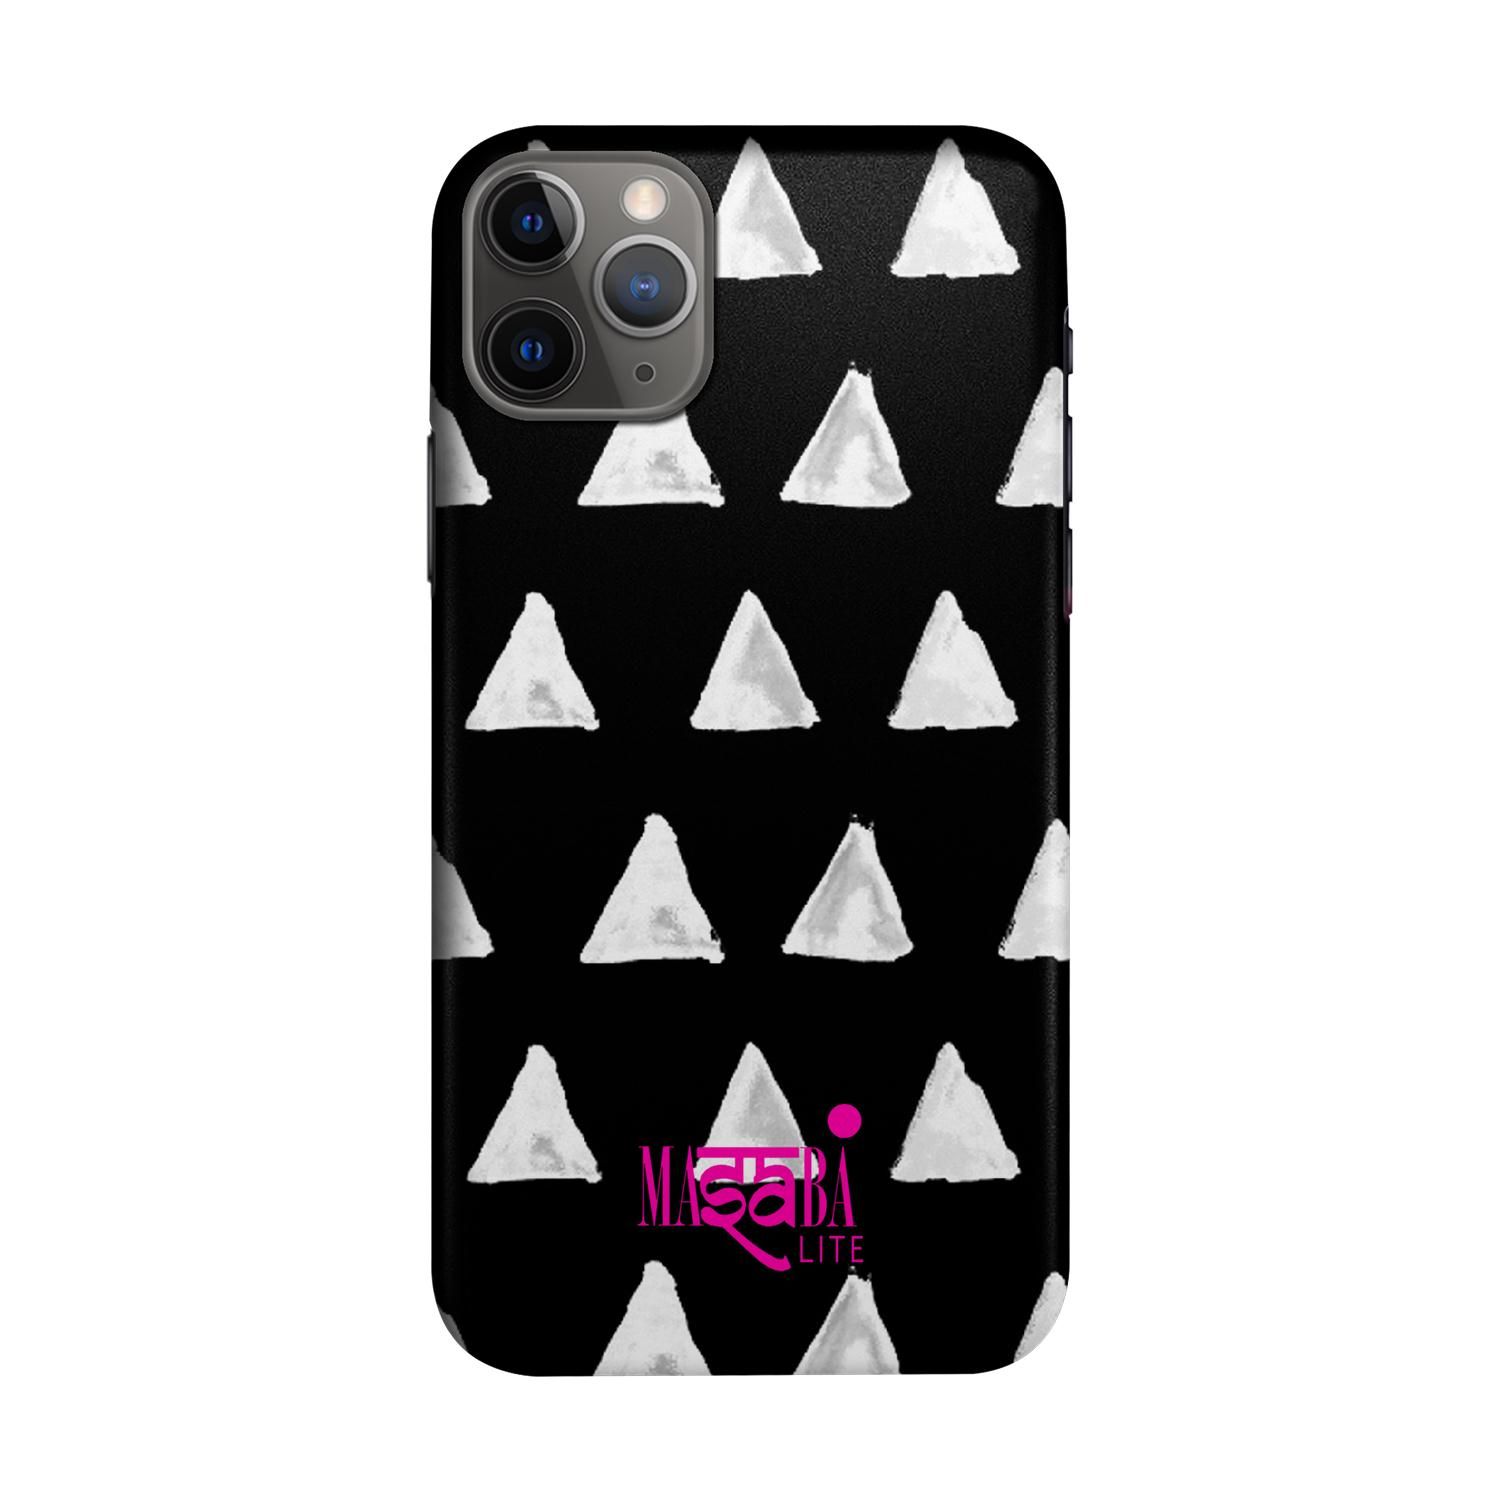 Buy Masaba Black Cone - Sleek Phone Case for iPhone 11 Pro Max Online